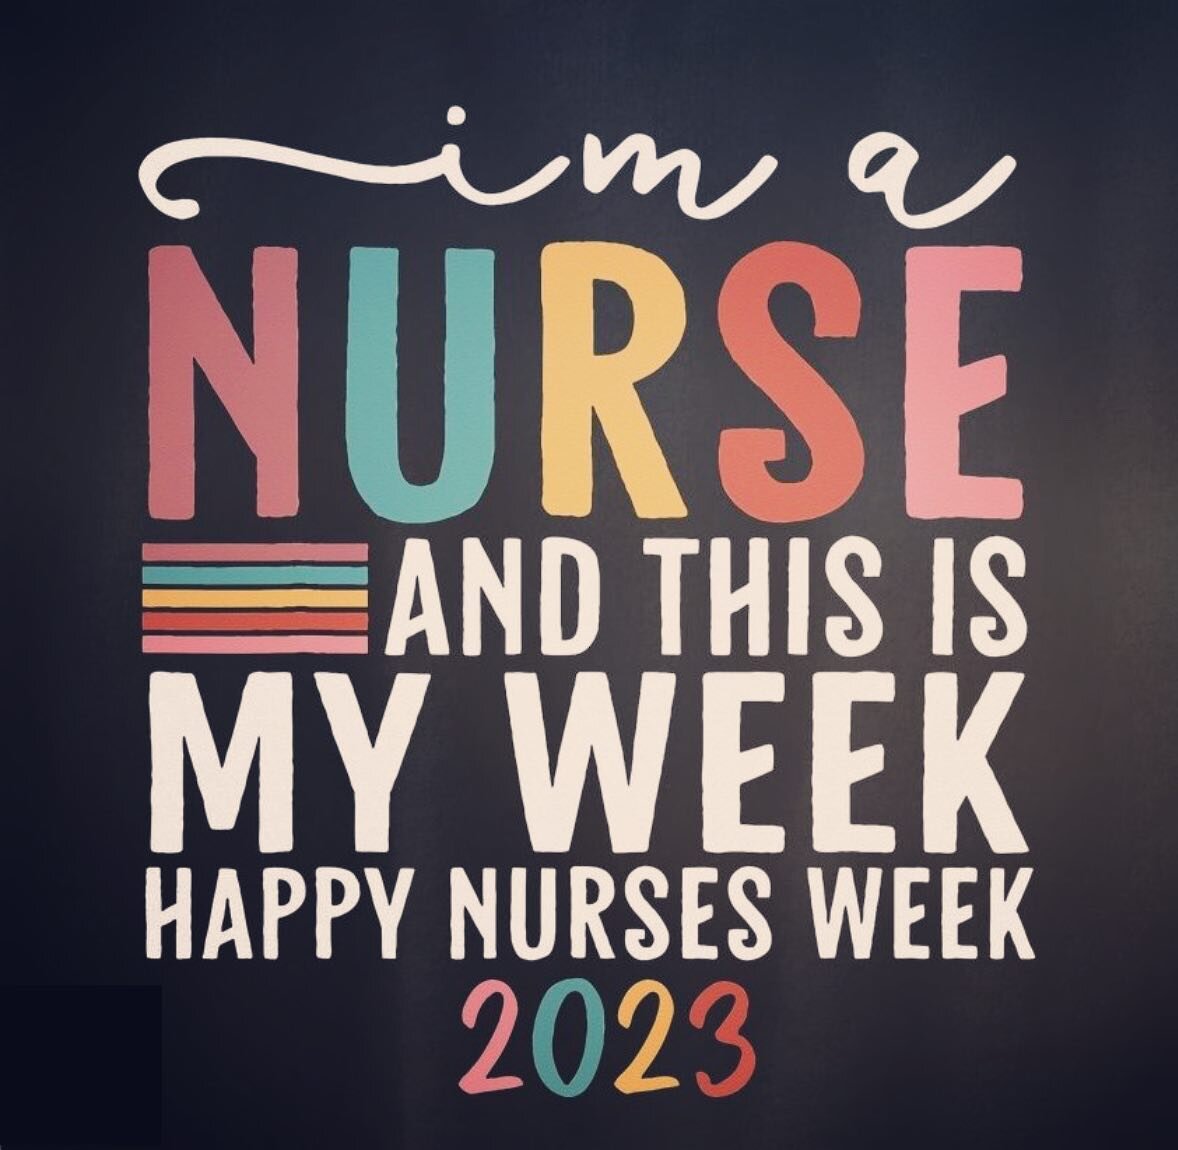 Wishing all my fellow nurses a very Happy Nurses Week!!
.
.
#rn #nurse #nurseproud #someherosdontwearcapes #nightnurse #nightshiftnurse